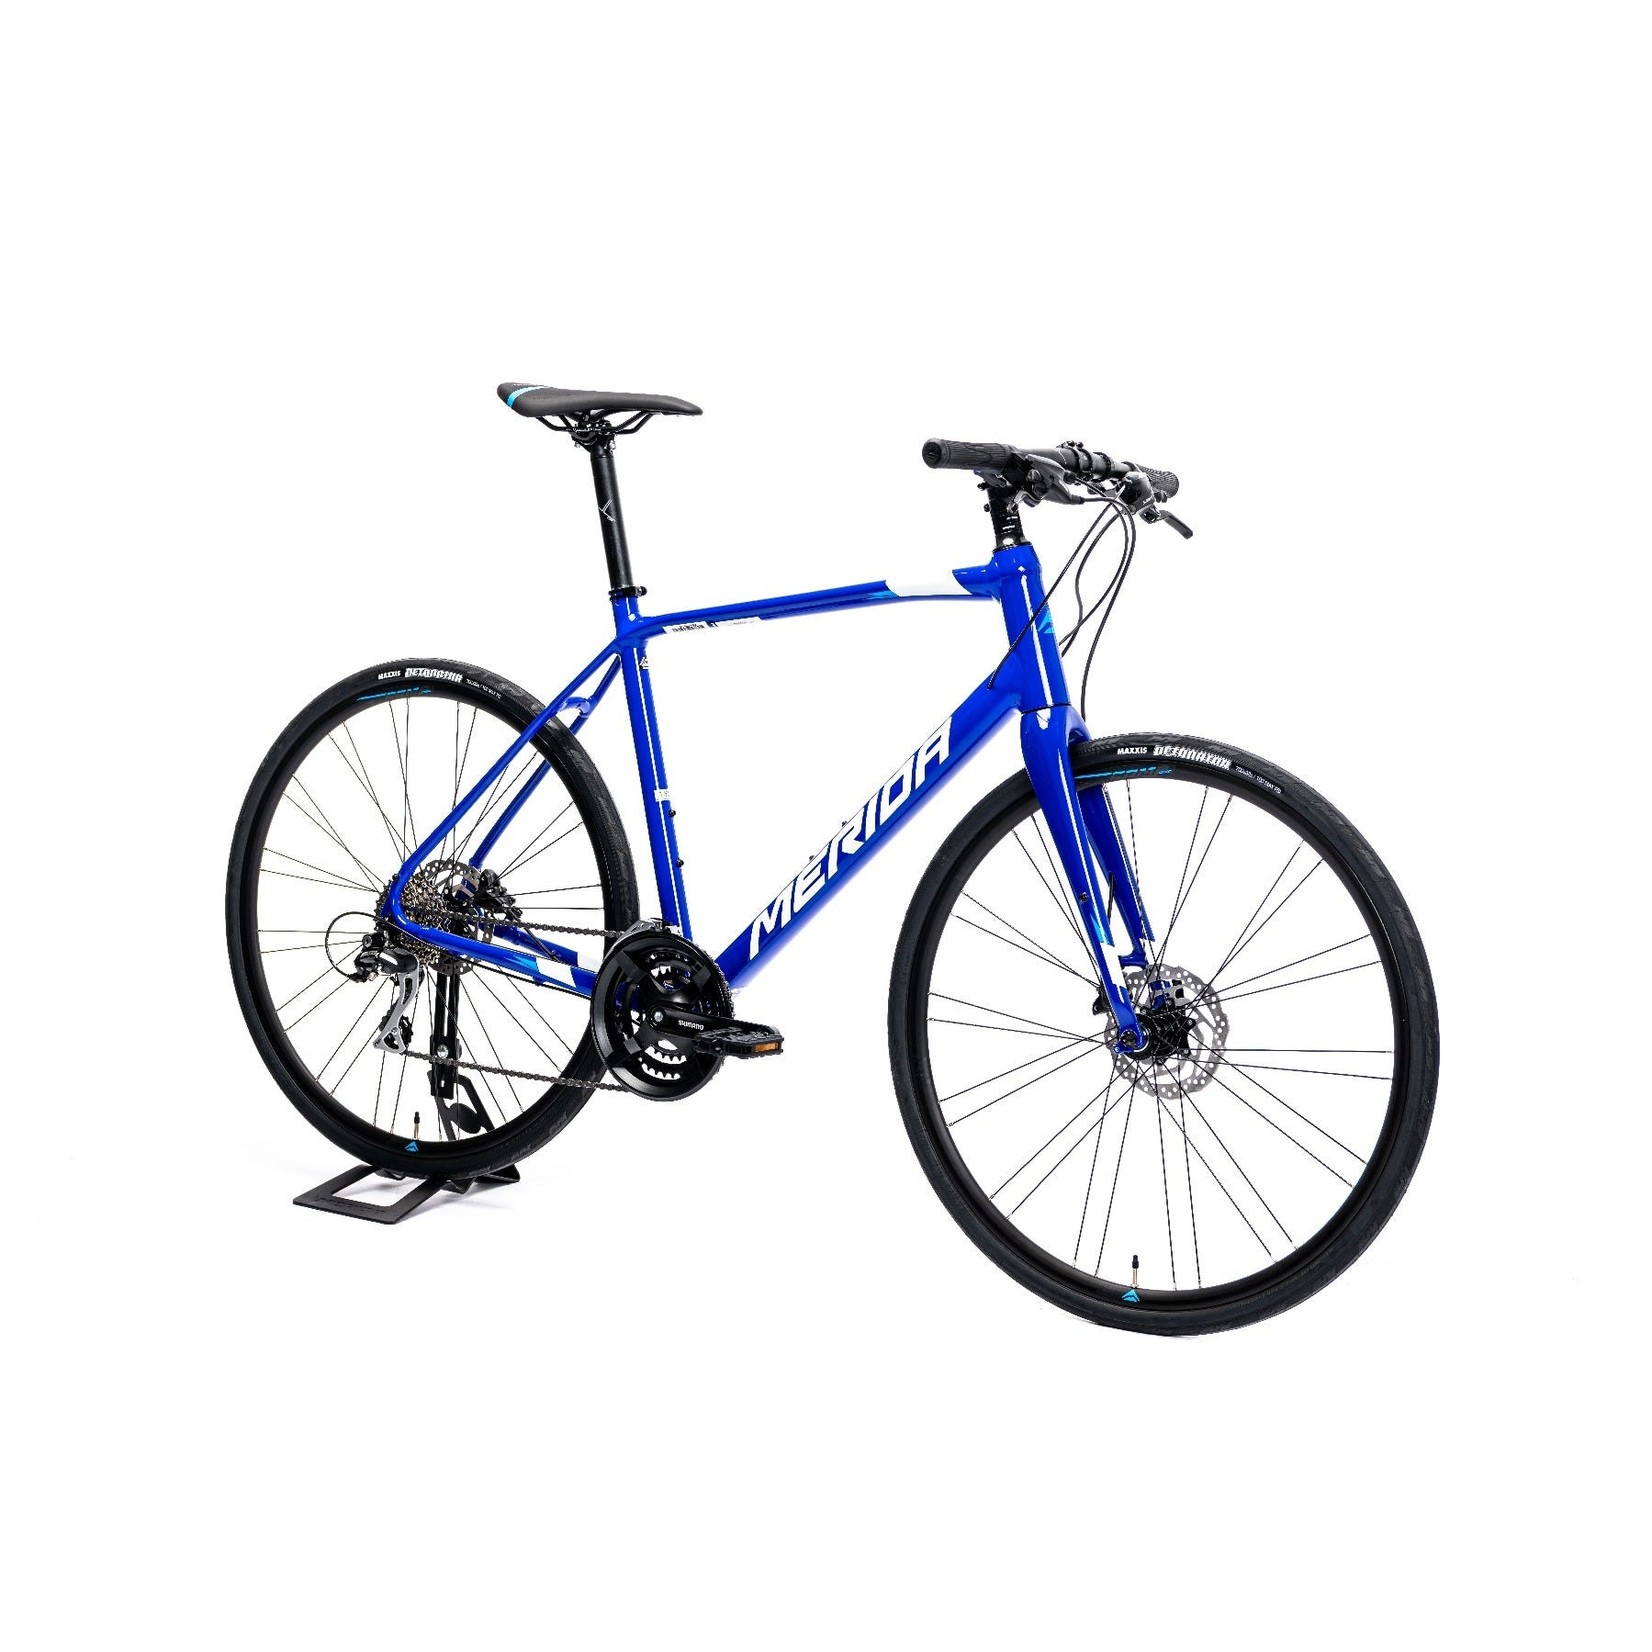 Merida Merida 2021 Speeder 100 Flat Bar Road Bike - Dark Blue(Blue/White) - Small/Medium(52)